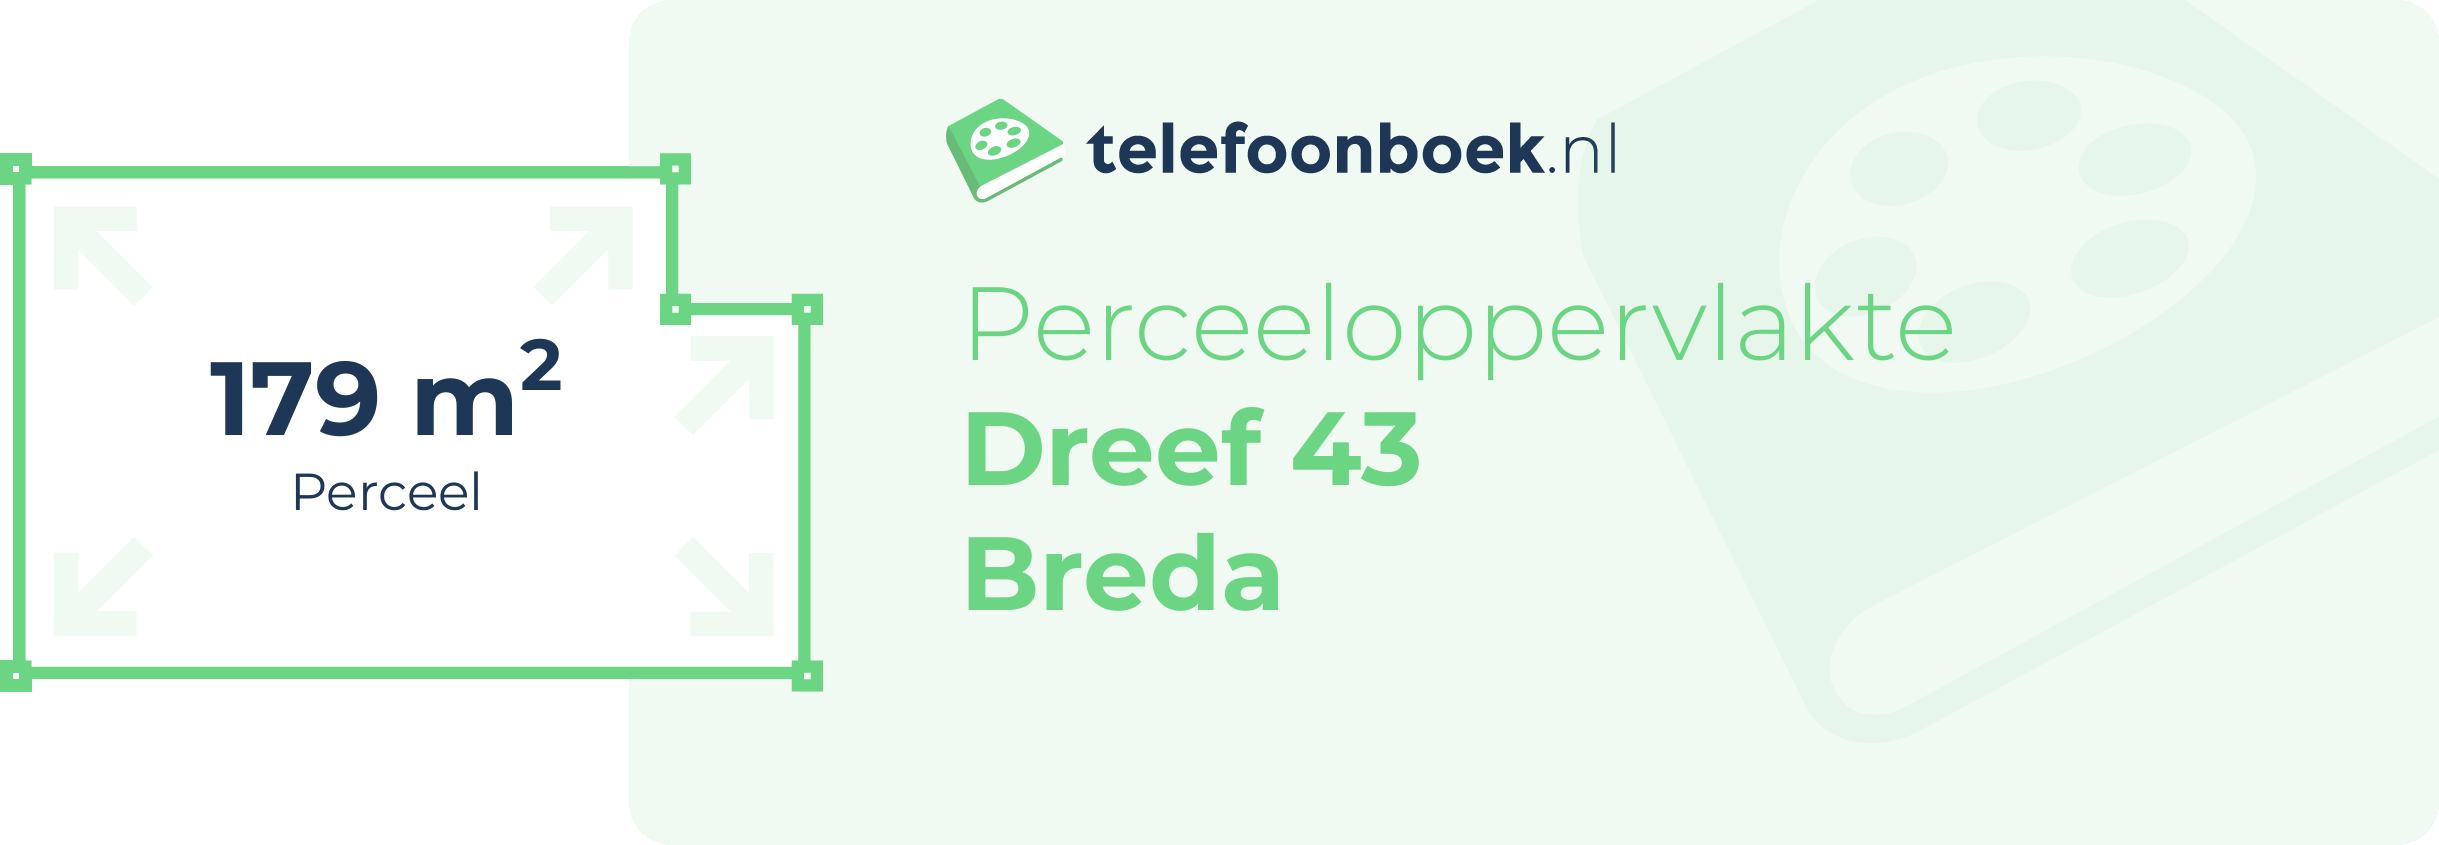 Perceeloppervlakte Dreef 43 Breda